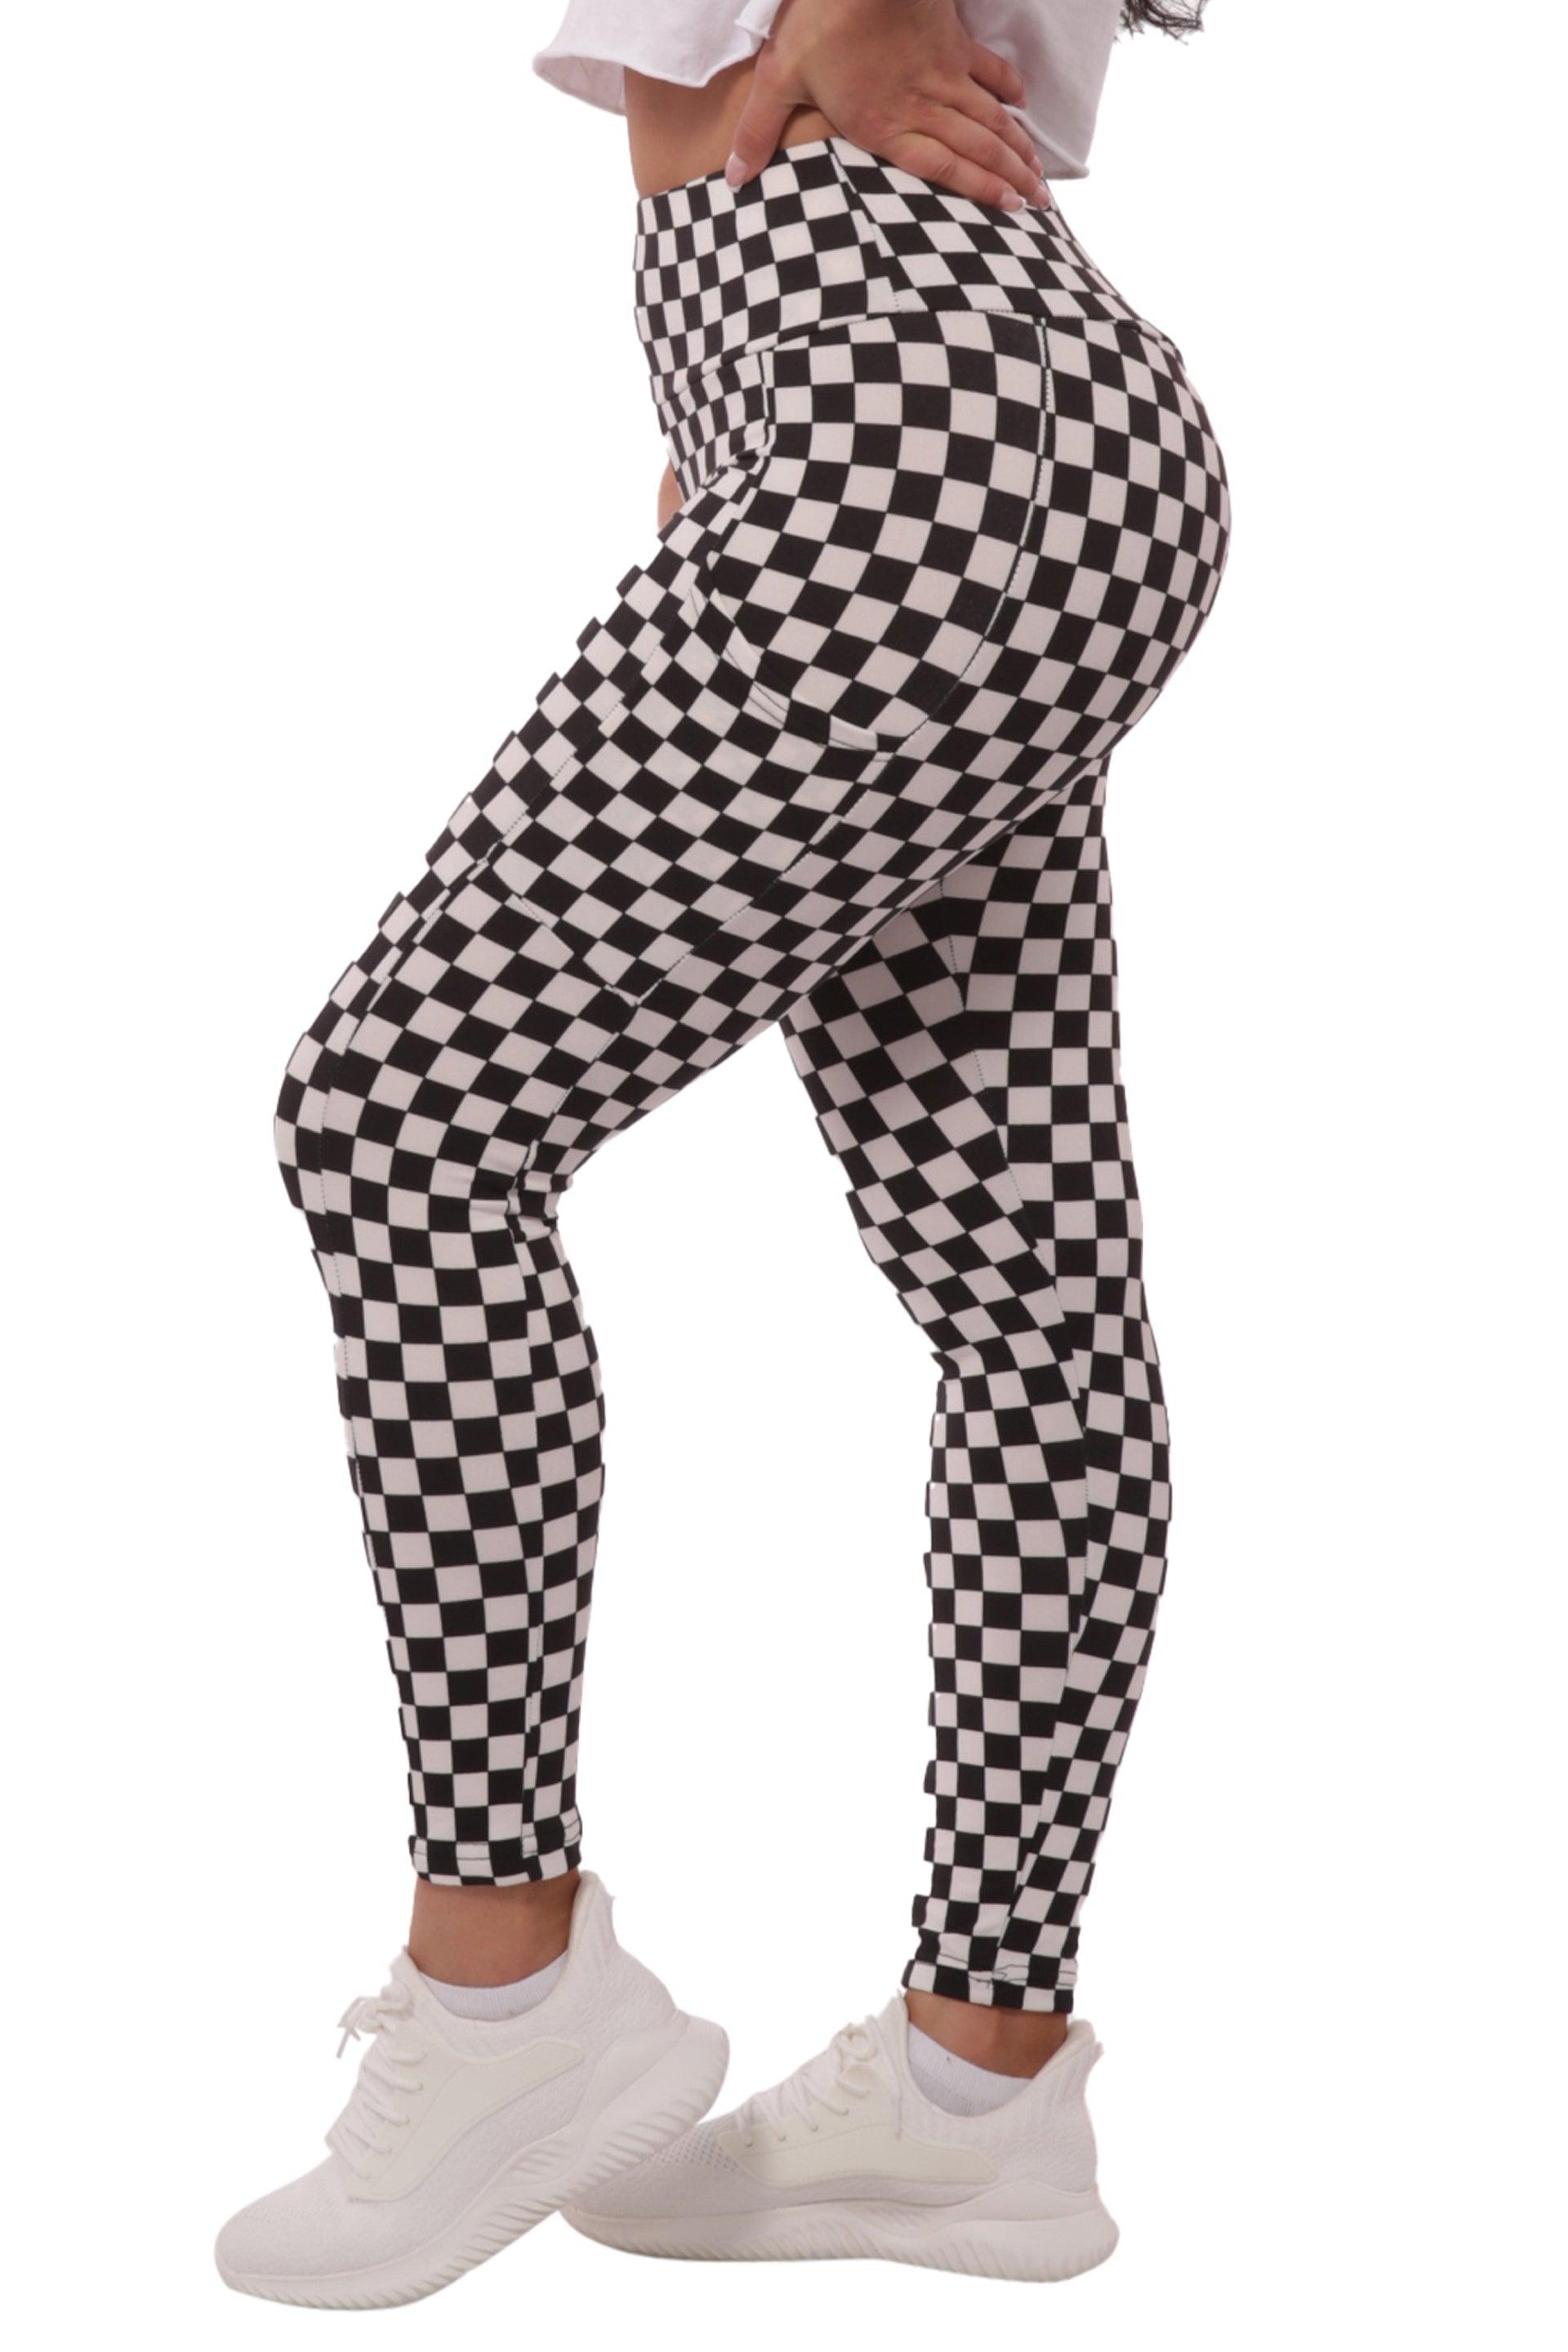 High Waist Fleece Lined Leggings With Side Pockets - Black & White Checkered - SHOSHO Fashion